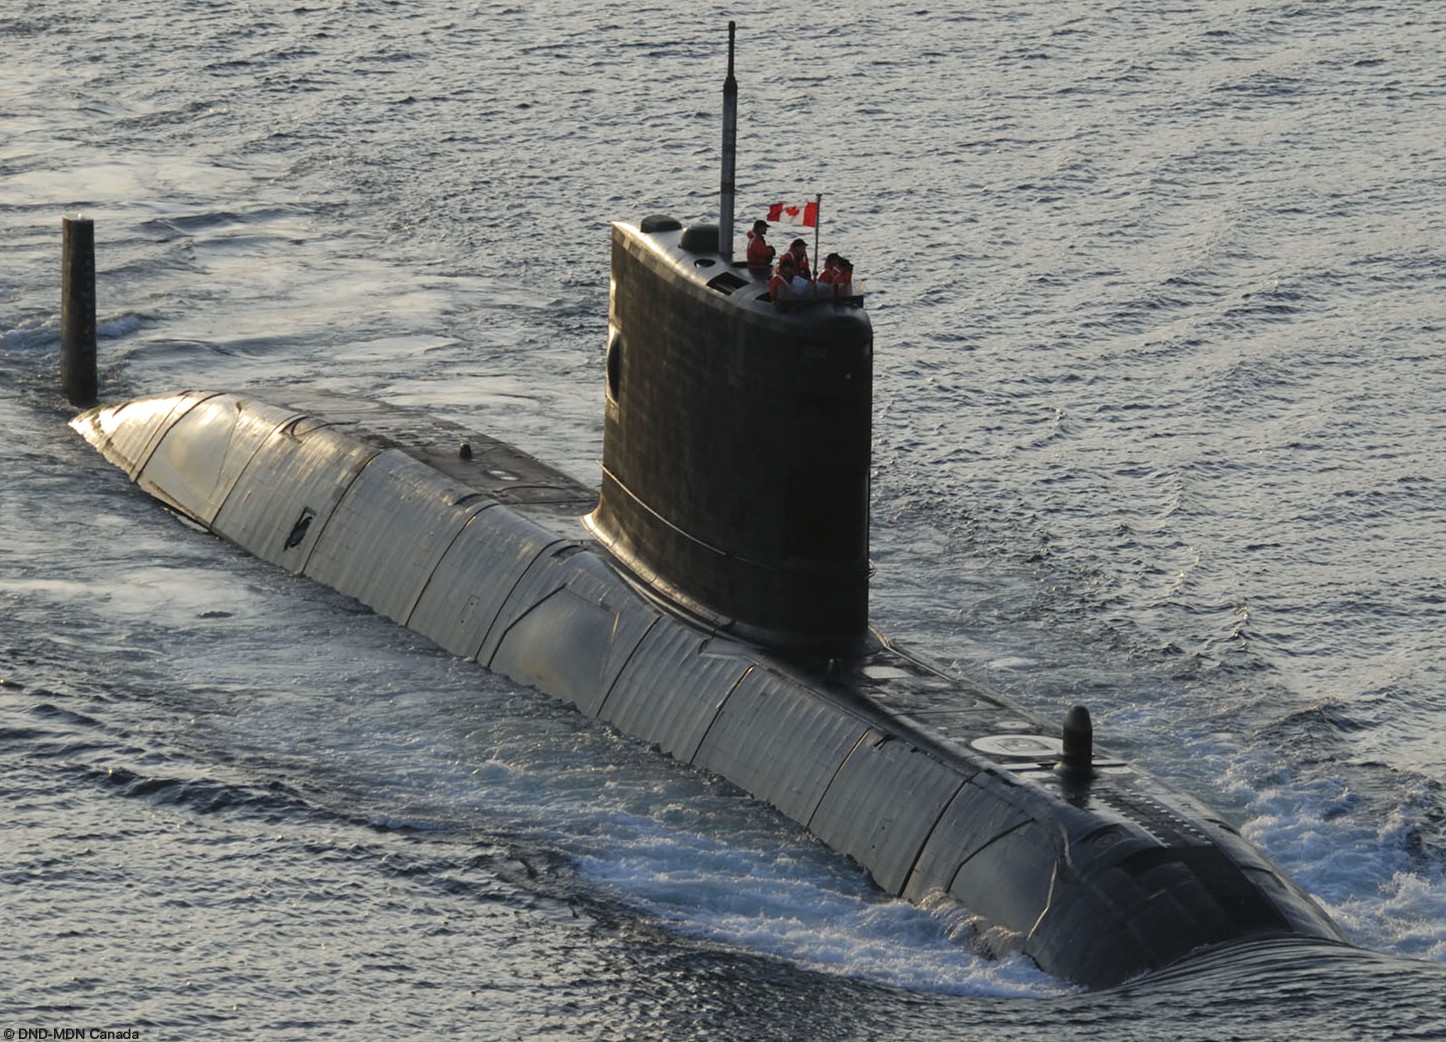 ssk-878 hmcs corner brook victoria upholder class patrol submarine ncsm royal canadian navy 14